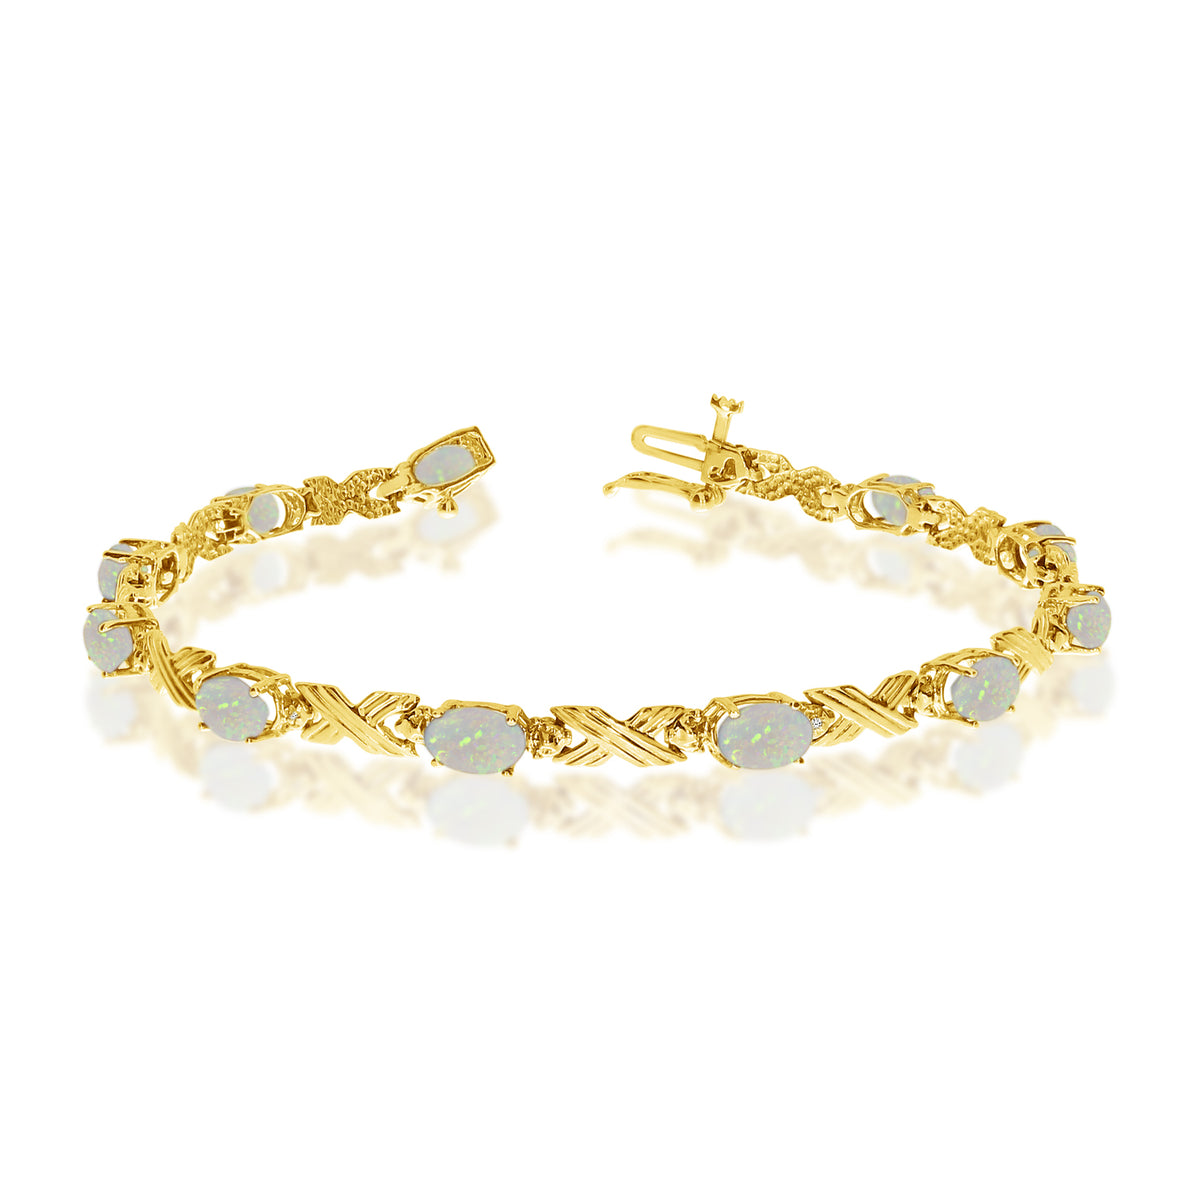 10K Yellow Gold Oval Opal Stones And Diamonds Tennis Bracelet, 7"